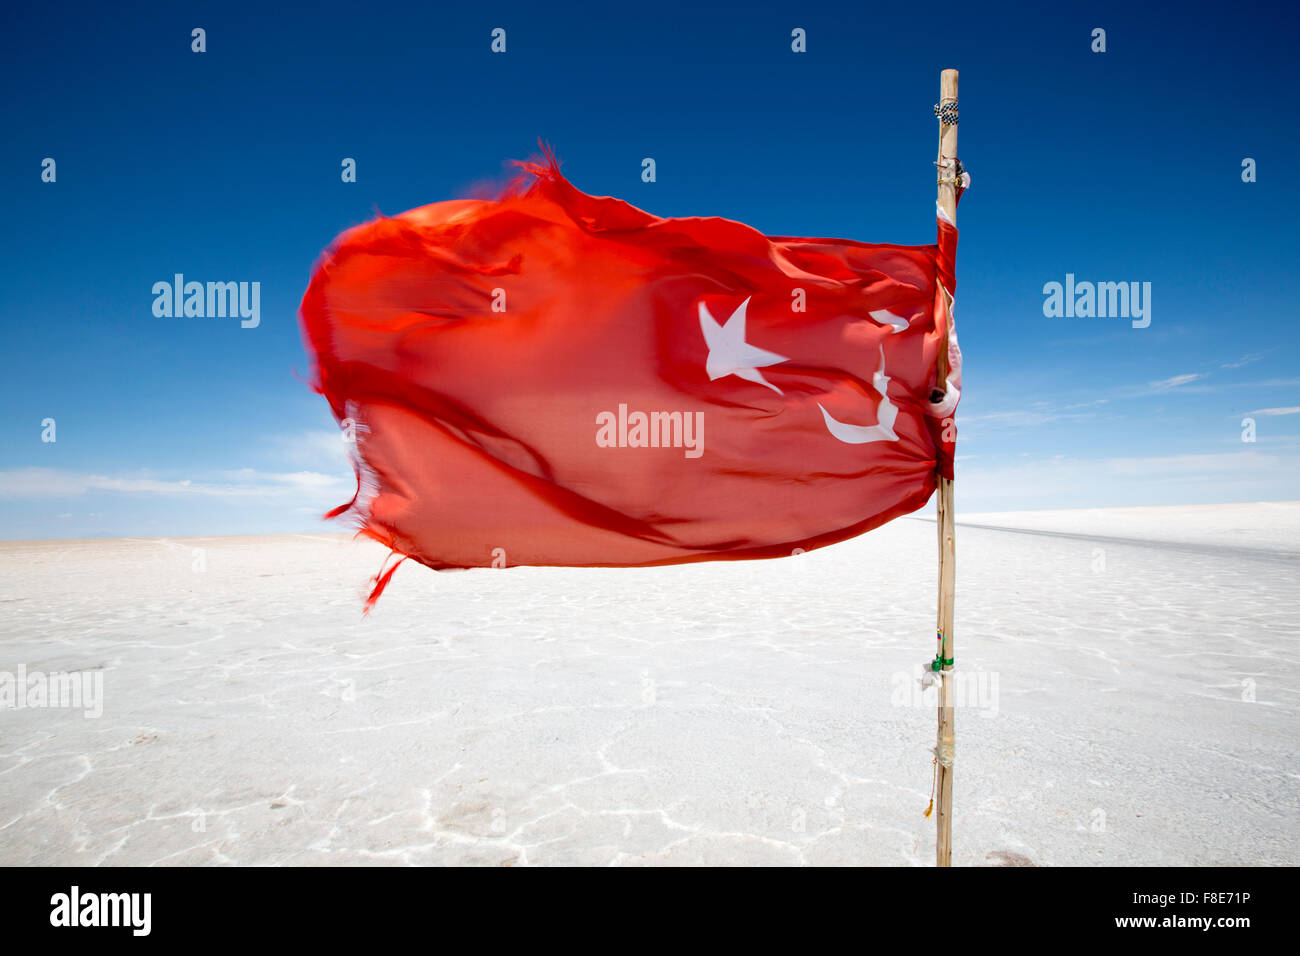 Turkish flag waving in the Salar of Uyuni against a blue sky. Bolivia Stock Photo